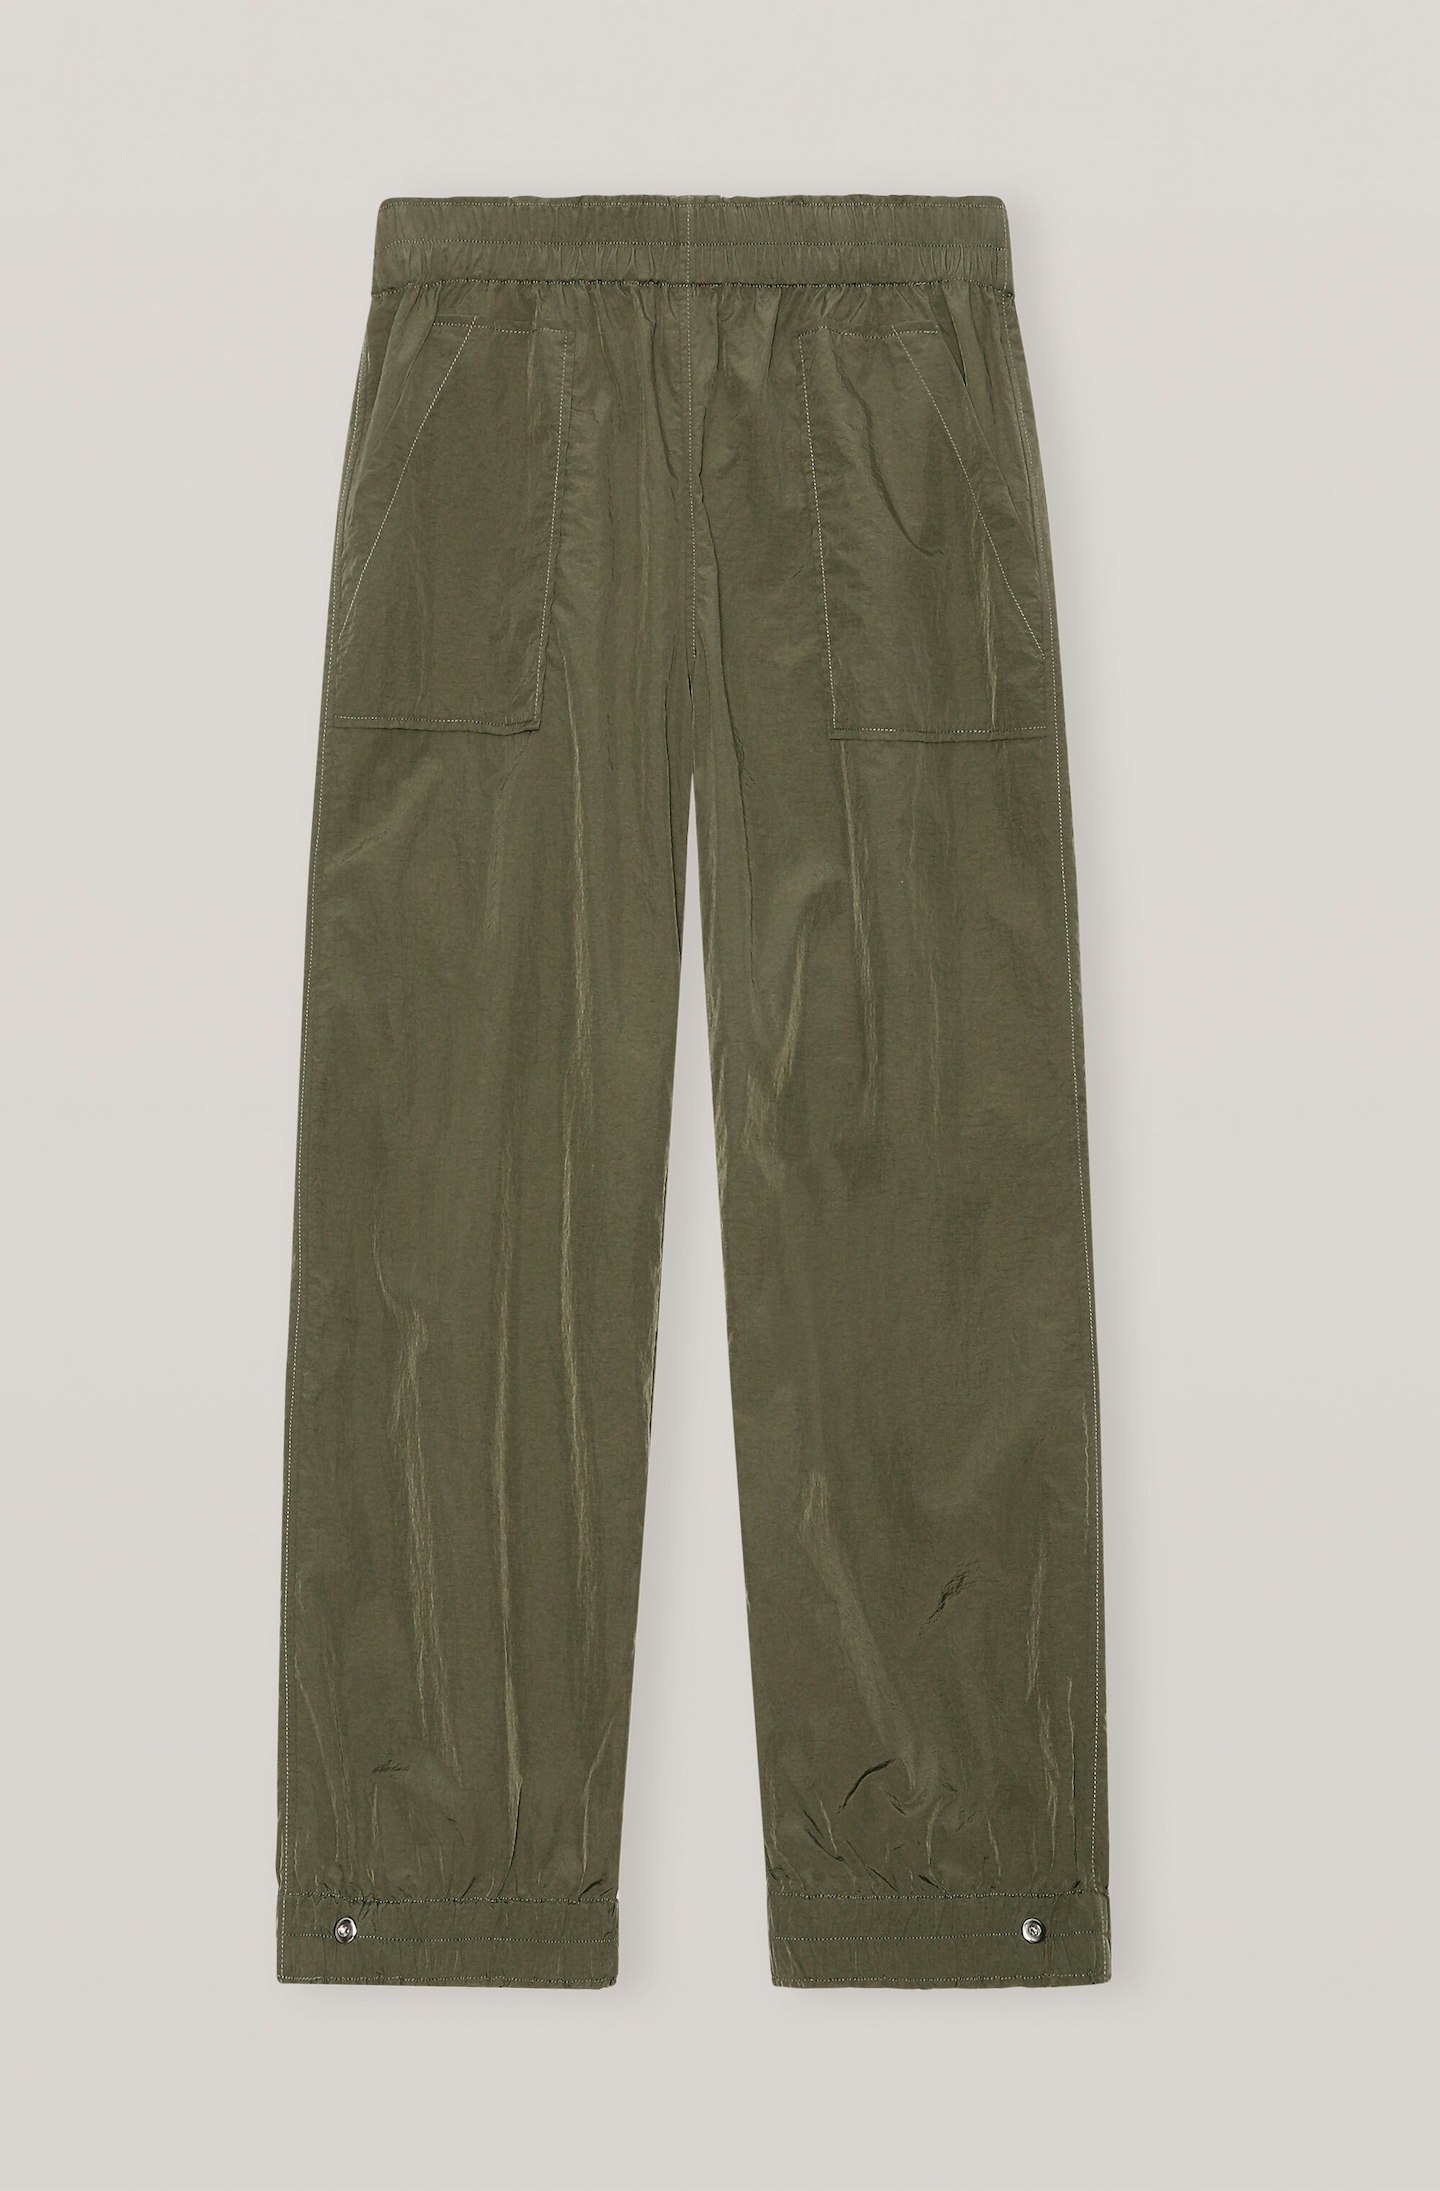 Ganni, Crinkled Tech Cuff Pants, £125